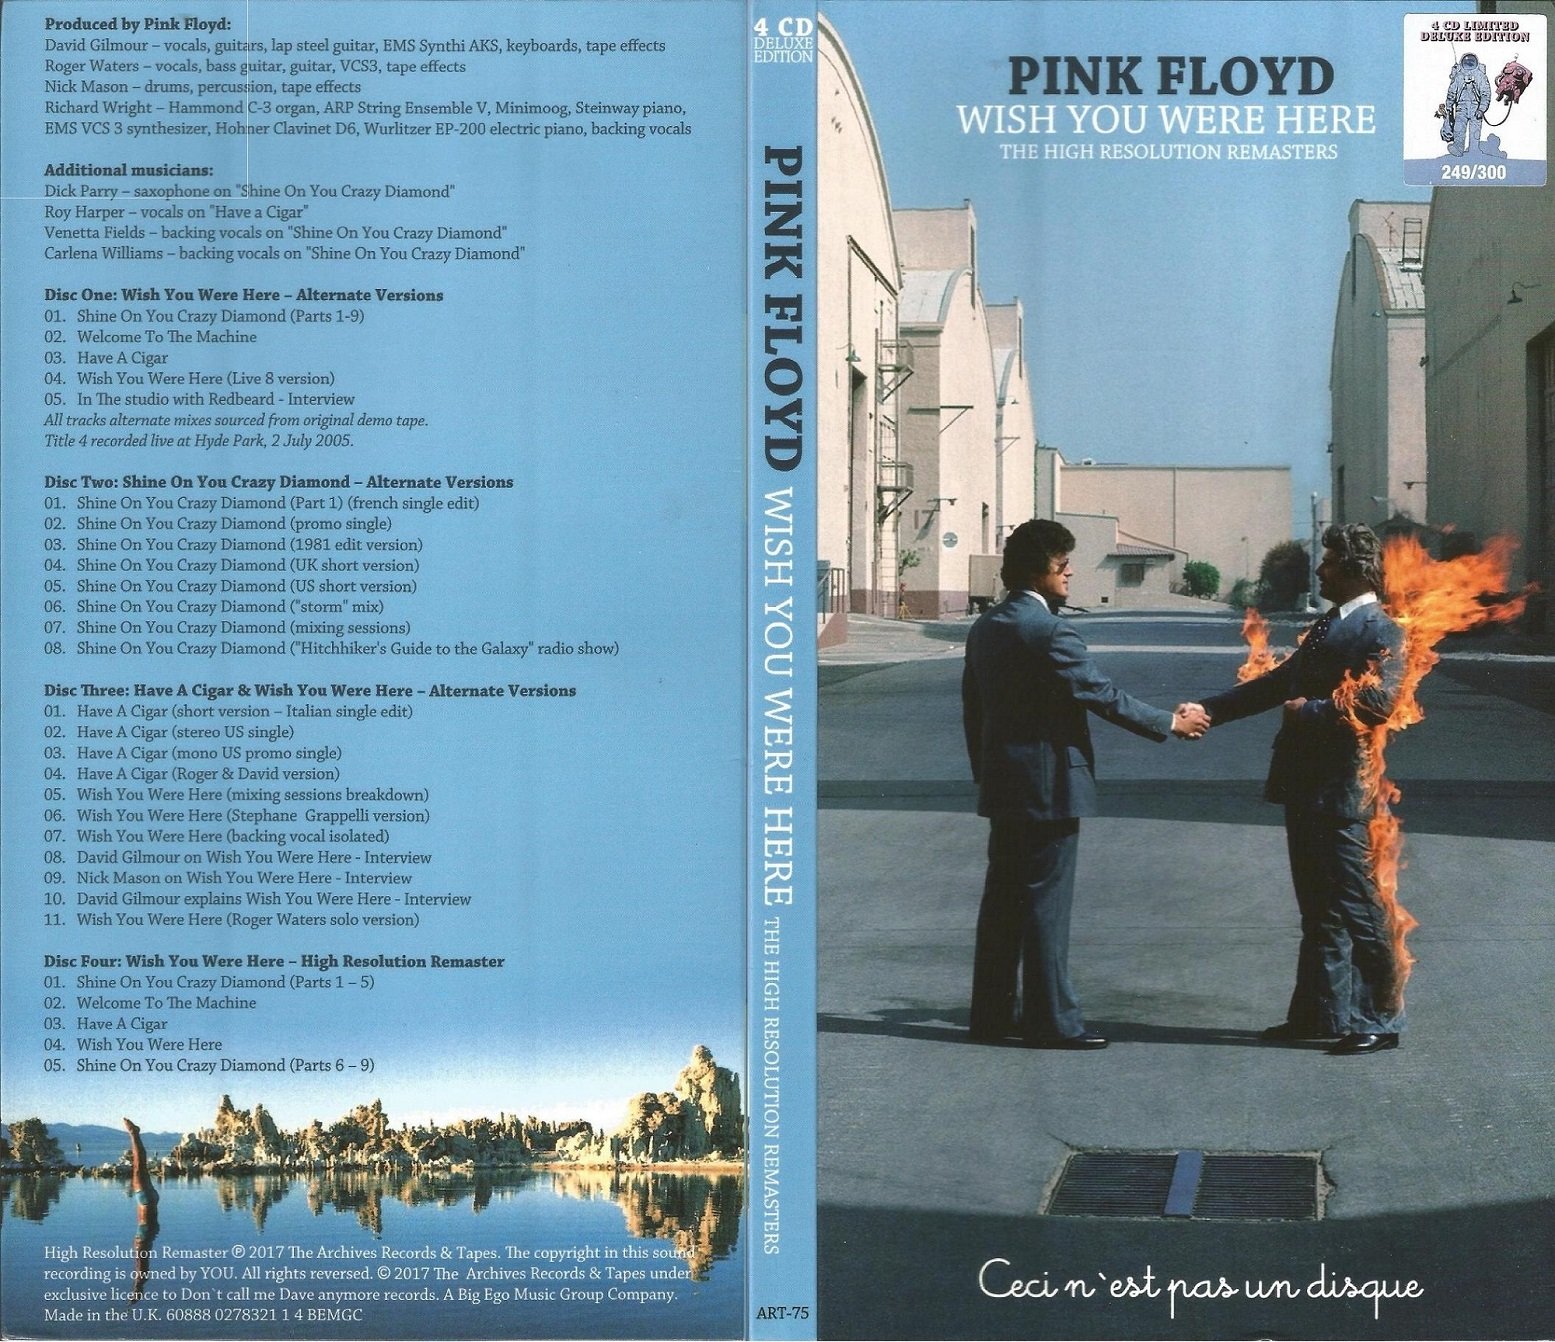 high resolution the 1975 album cover